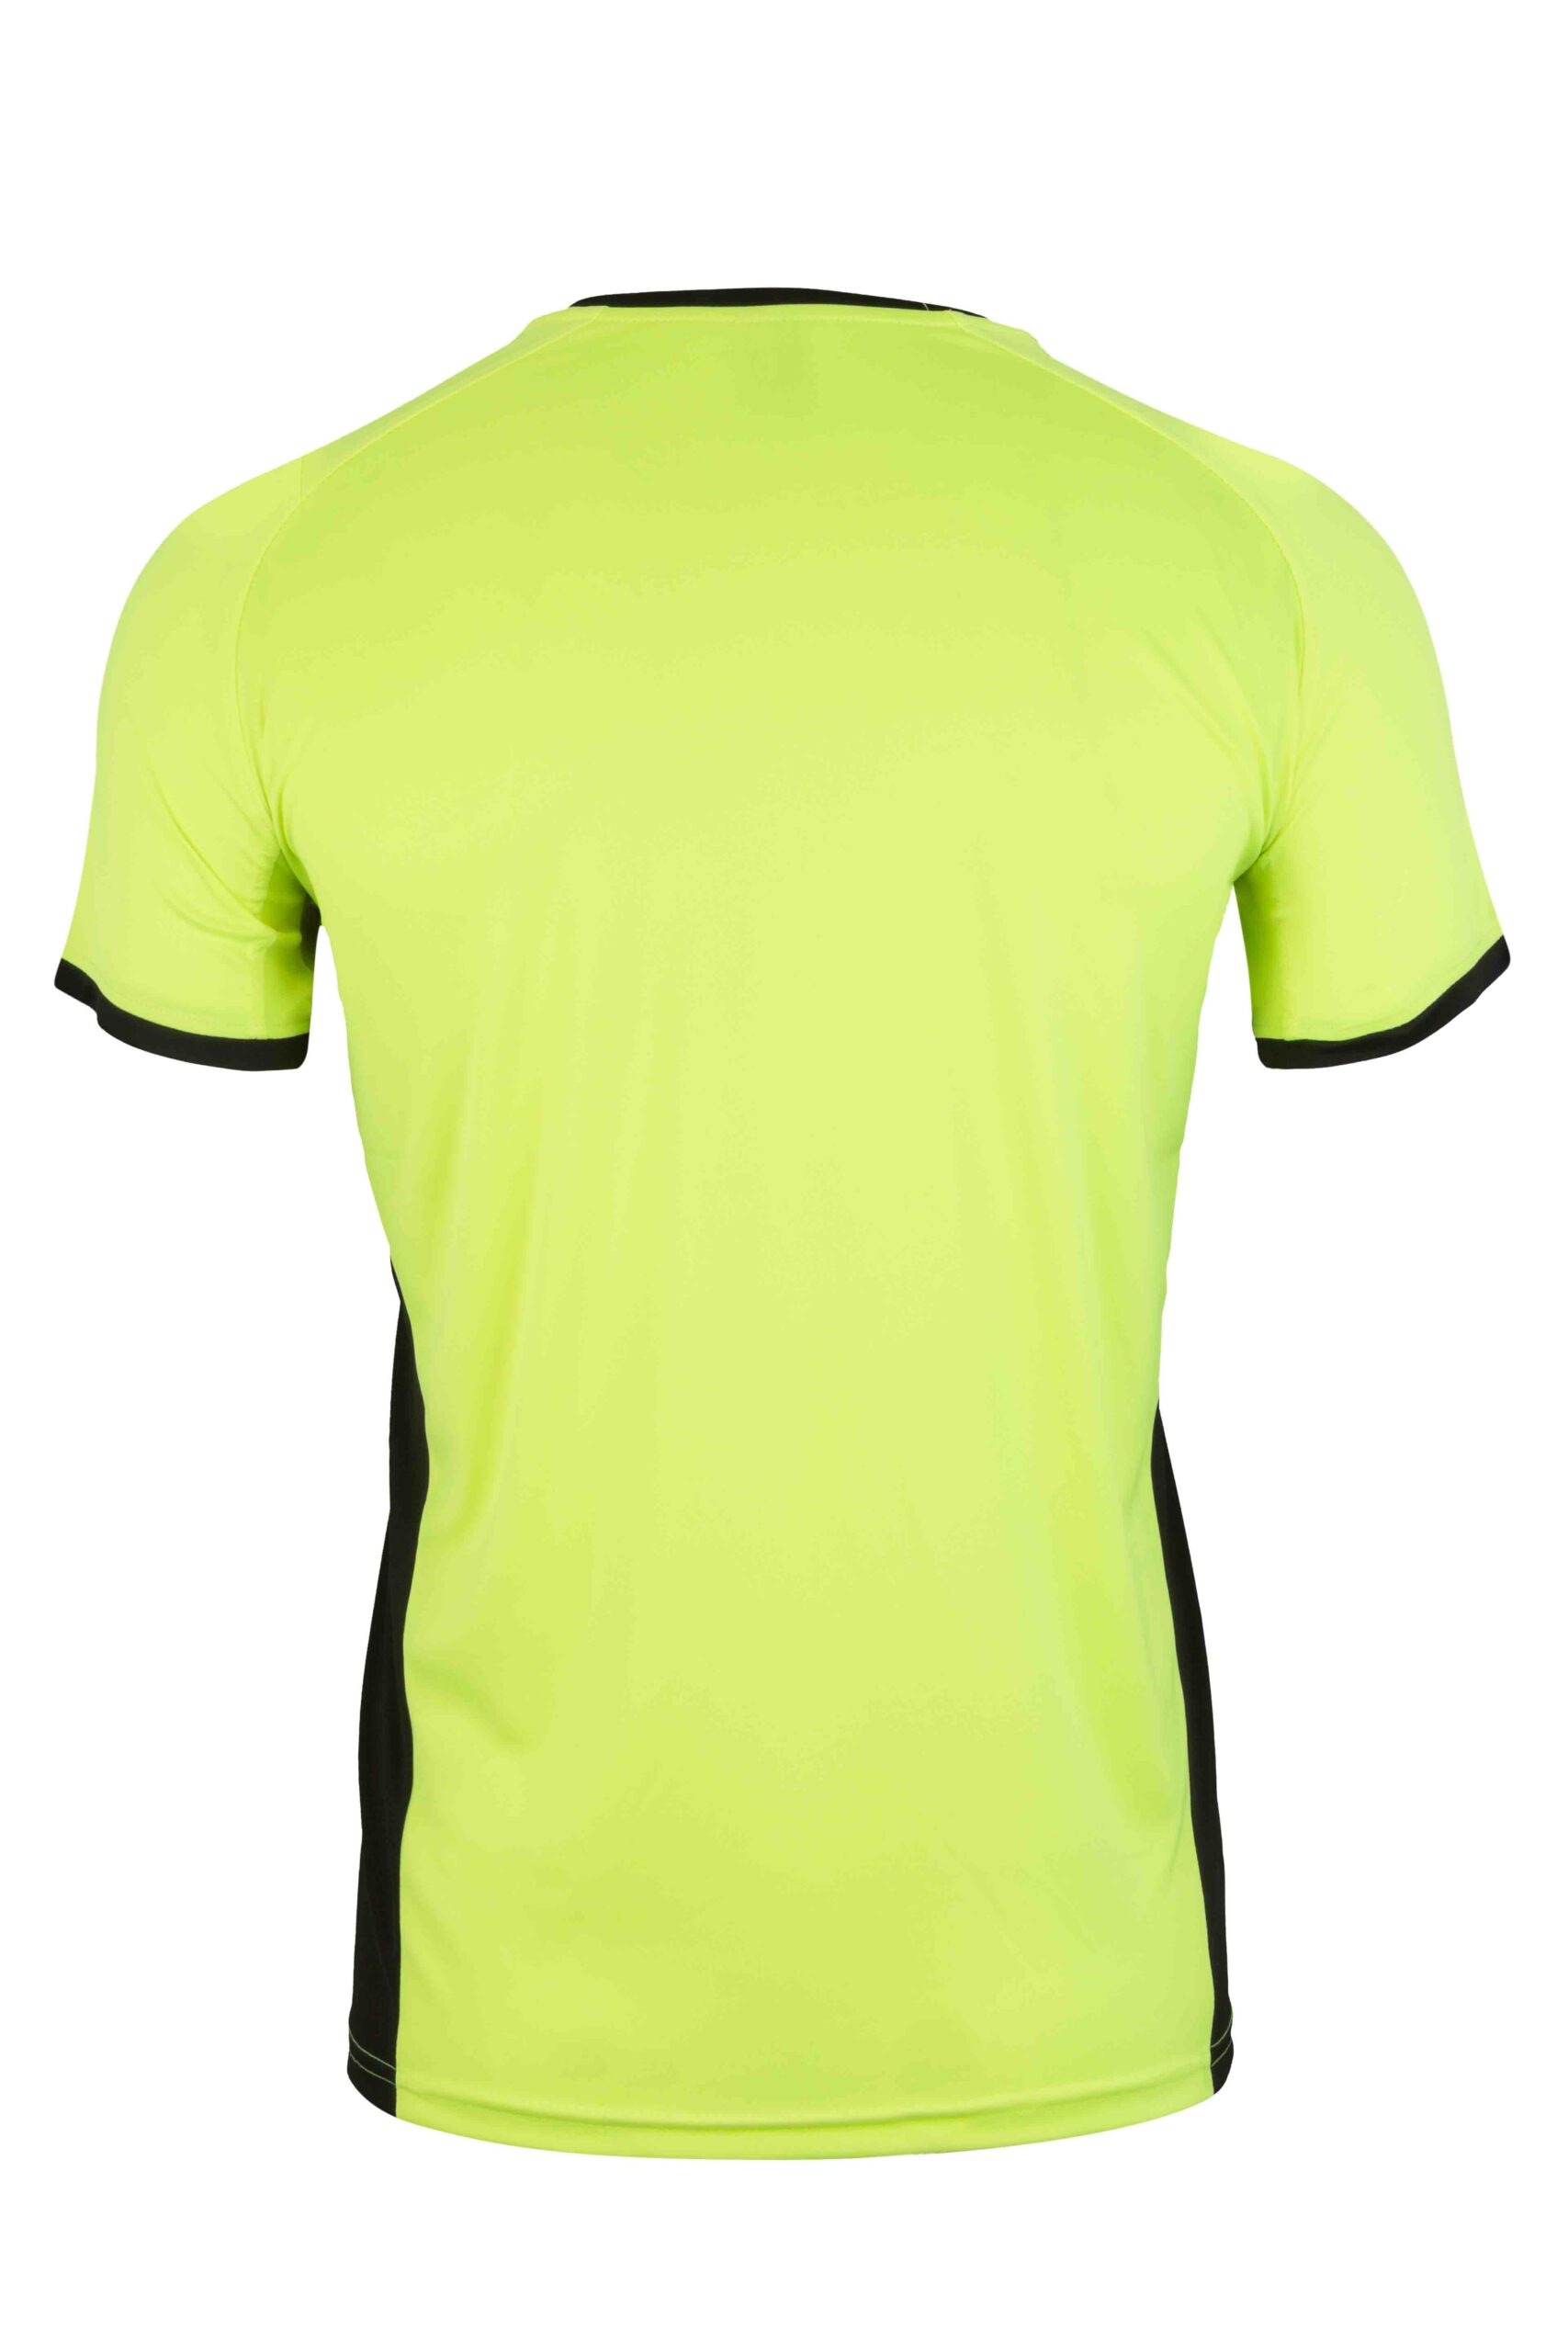 Mukua Mk530v Mukua Camiseta TÉcnica Manga Corta Bicolor FlÚor Yellow Blak 2